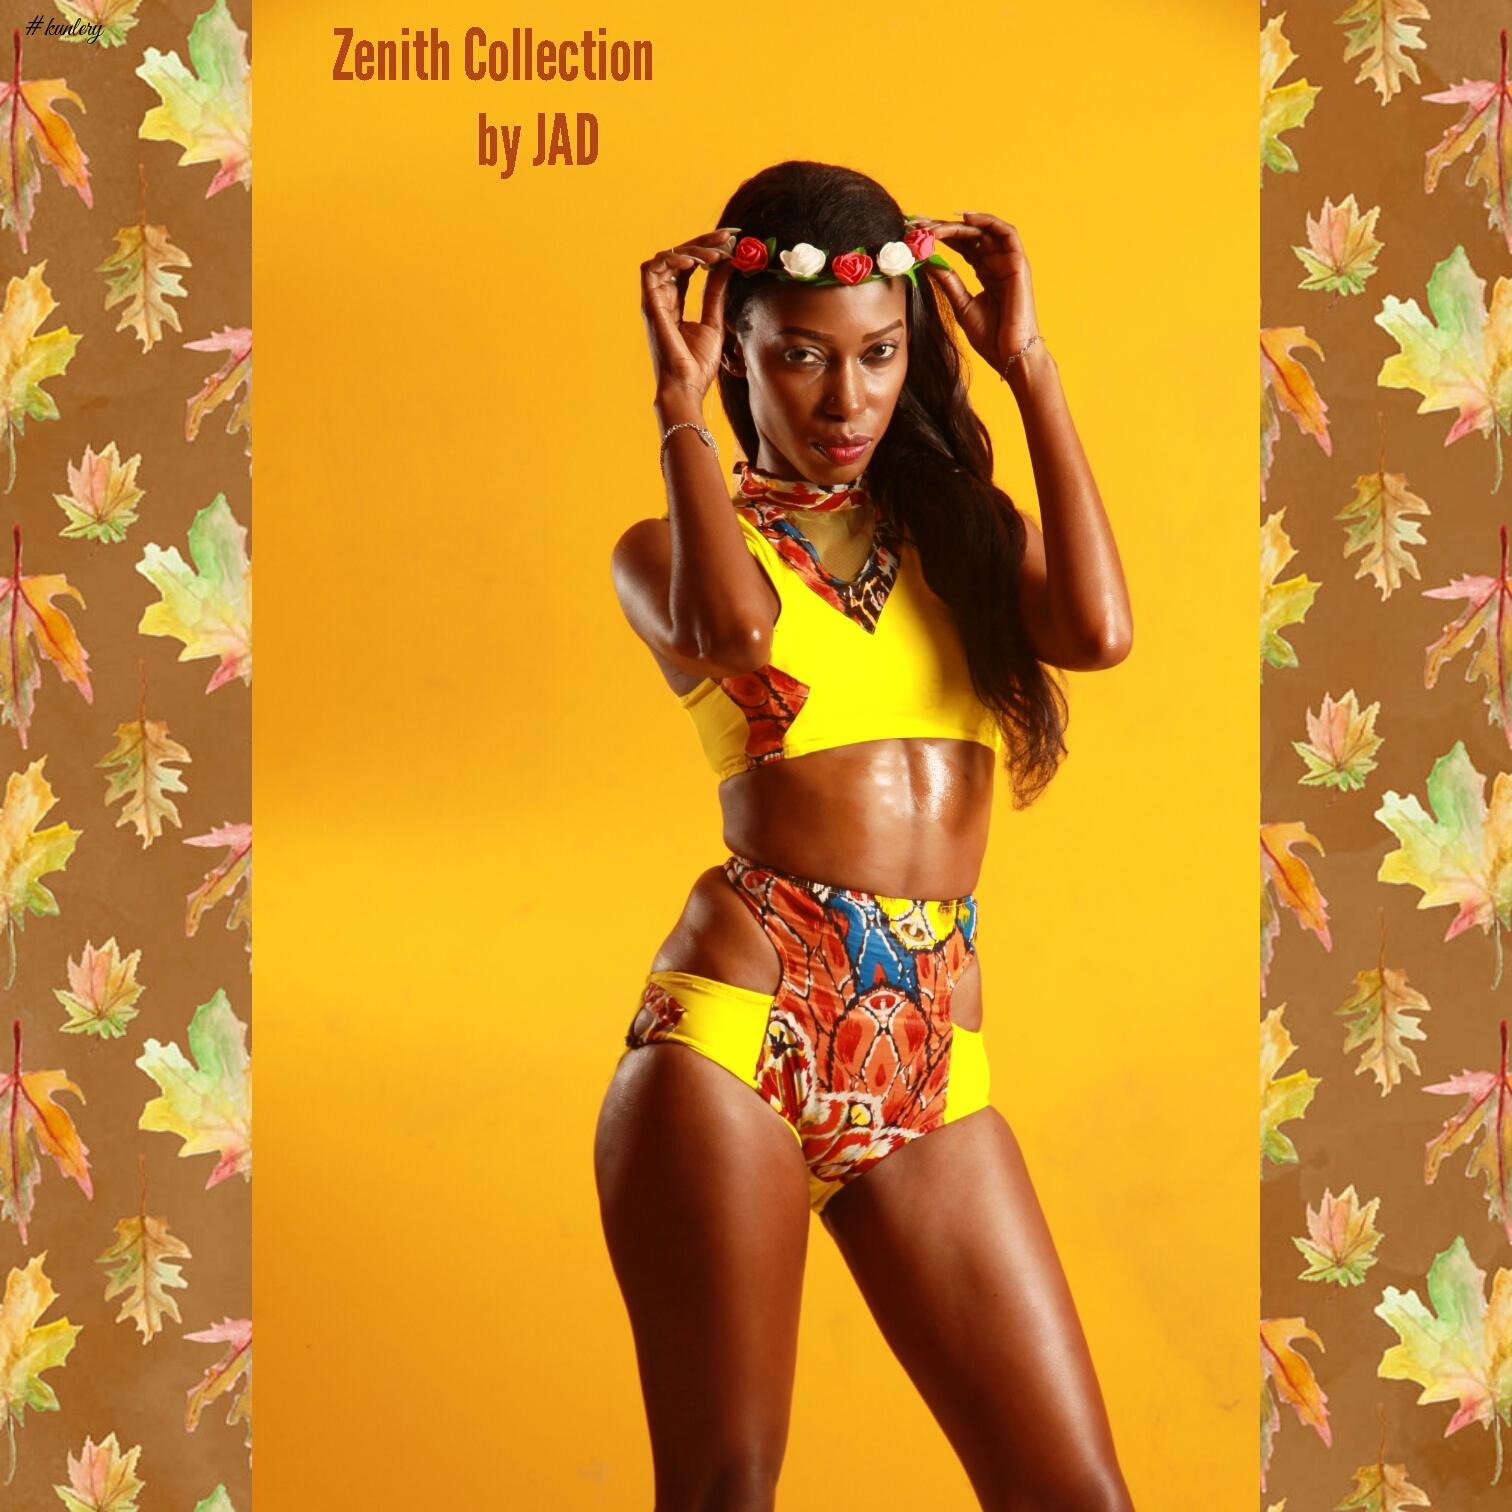 Senegalese Designer Brand JAD Presents The First Part Of It’s Zenith Swimwear Collection